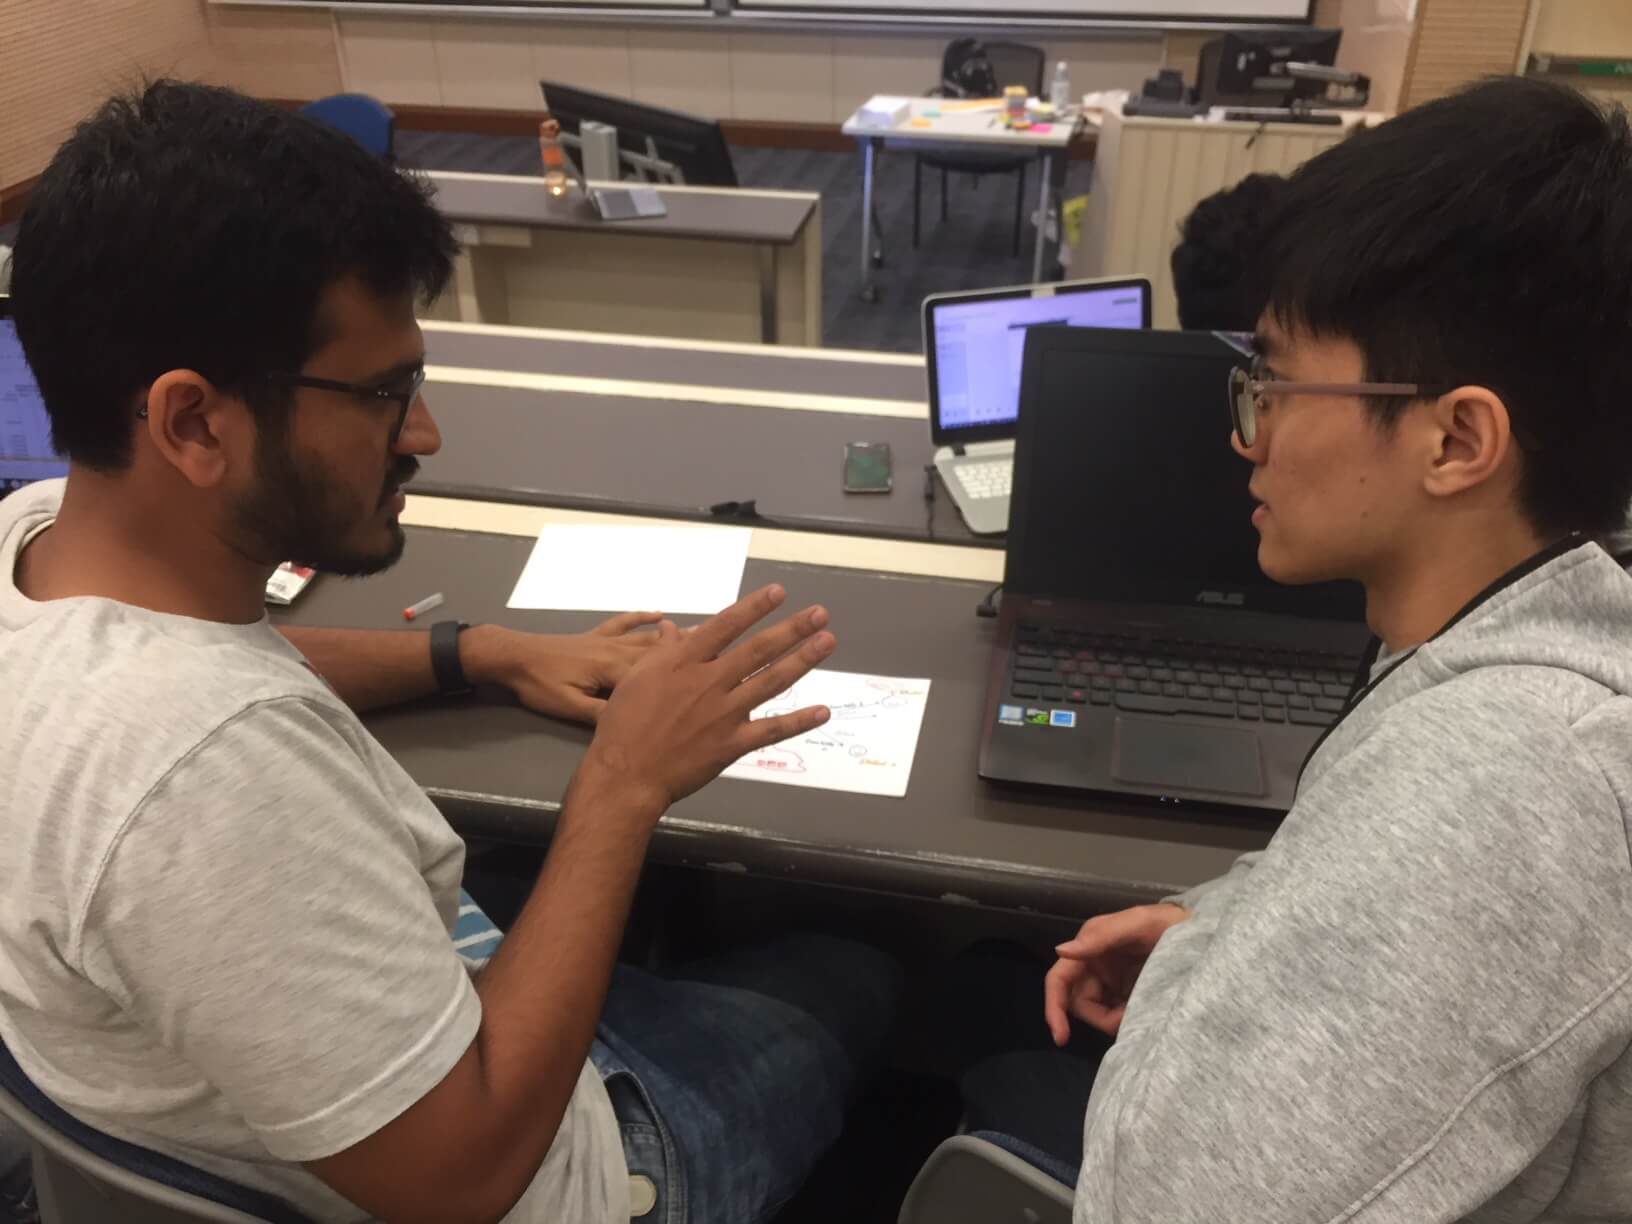 Aakash takes Stephen through his team's daily scheduler prototype